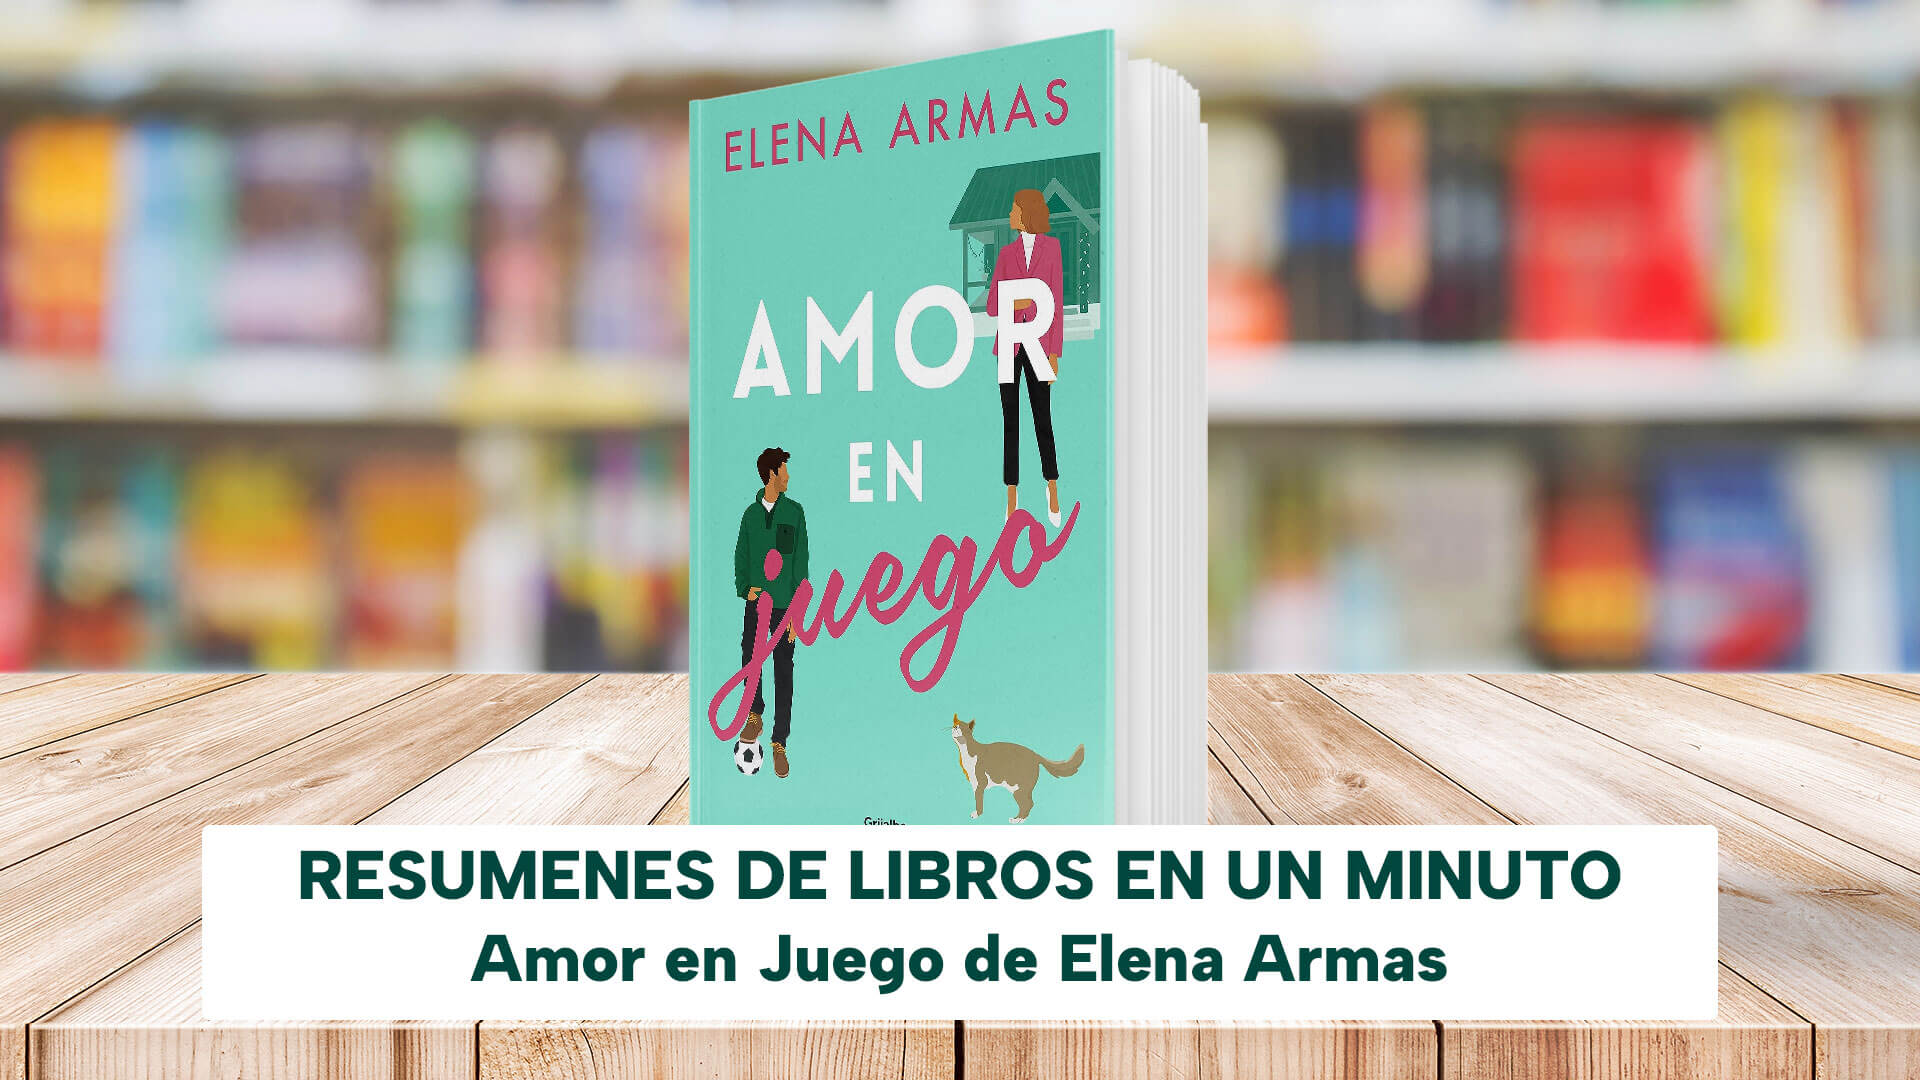 Book Club: Farsa de amor a la española